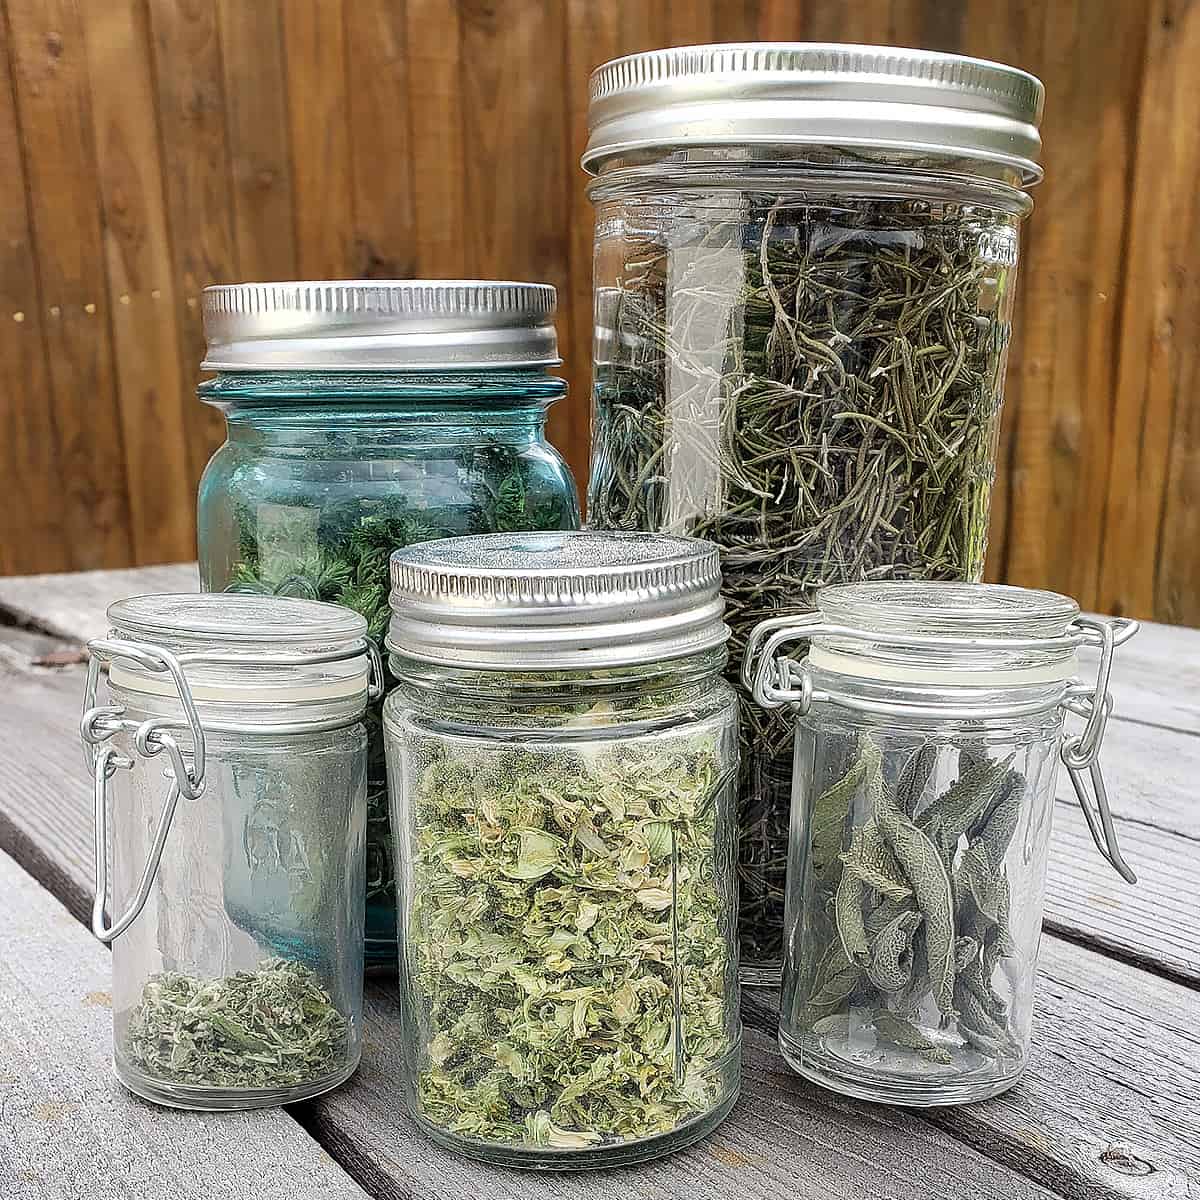 https://www.thepurposefulpantry.com/wp-content/uploads/2021/05/store-herbs-feat1.jpg